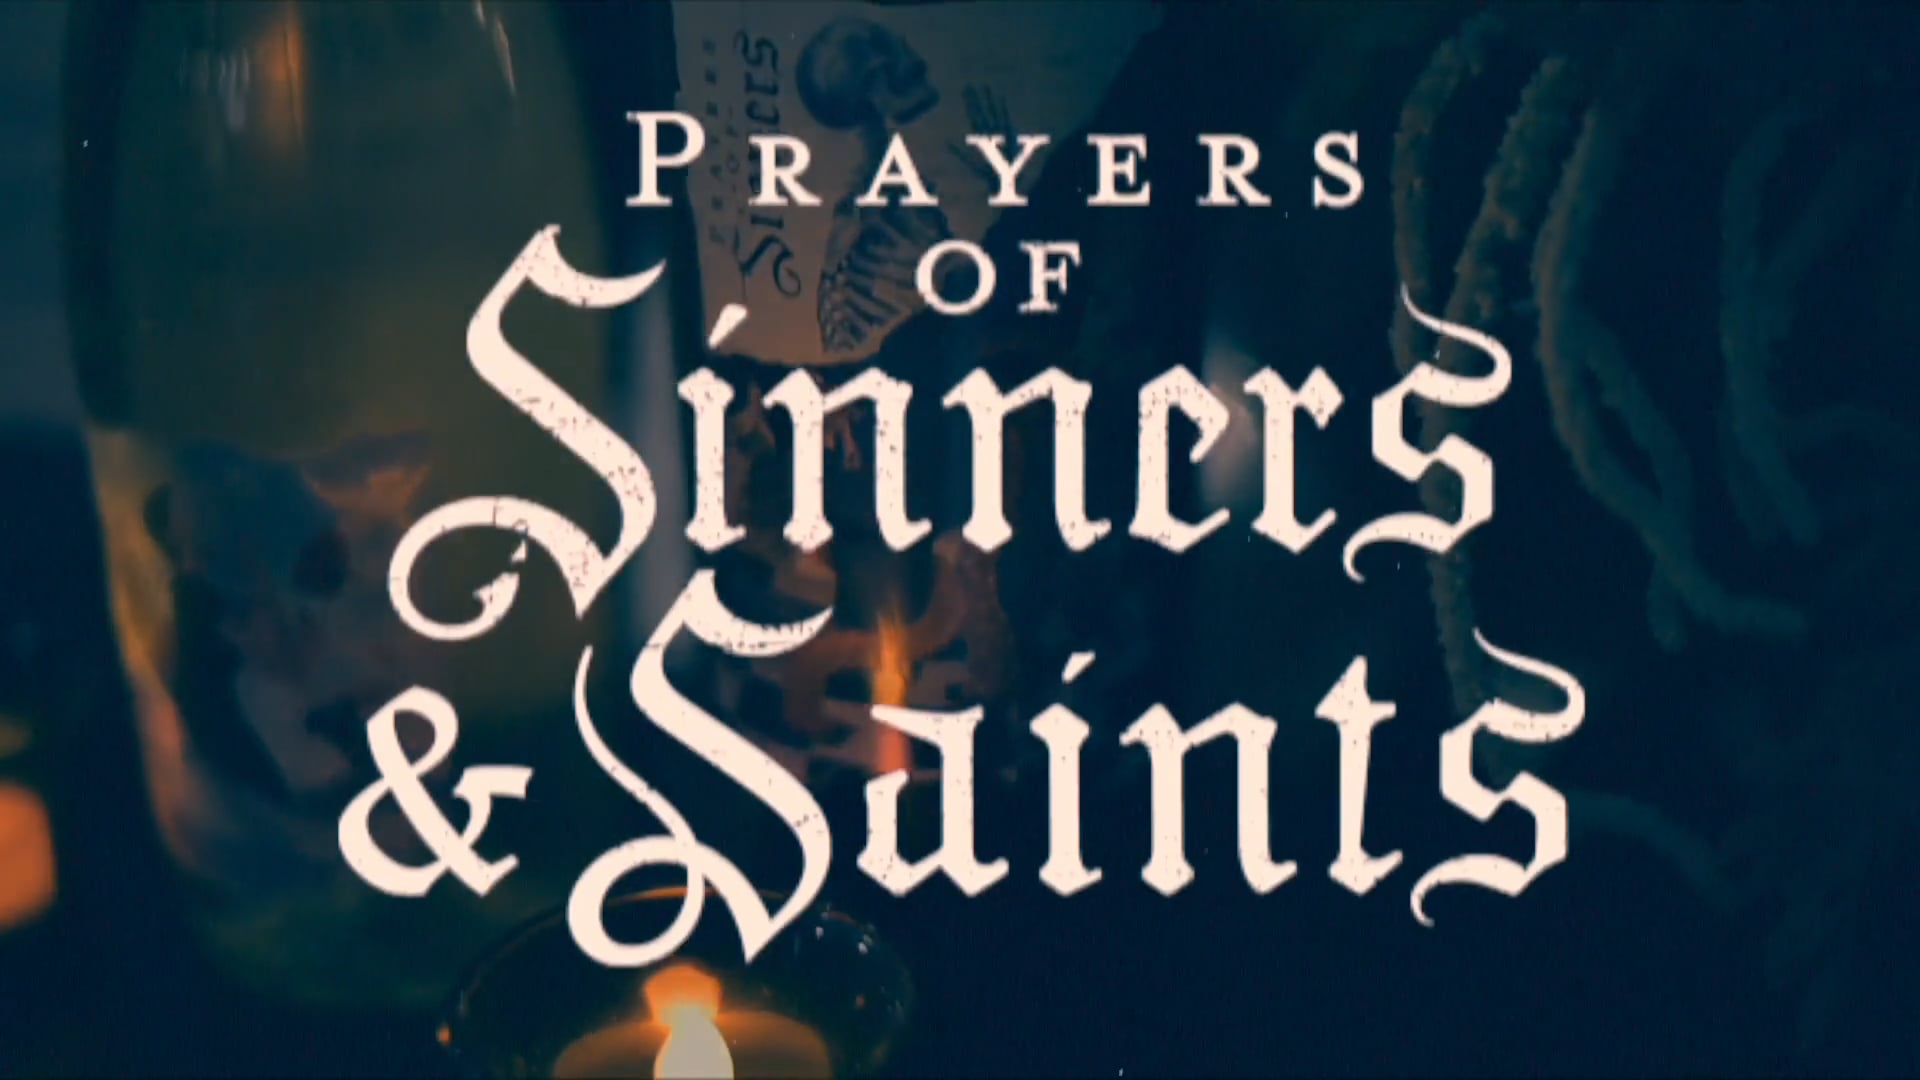 Prayers of Sinners & Saints